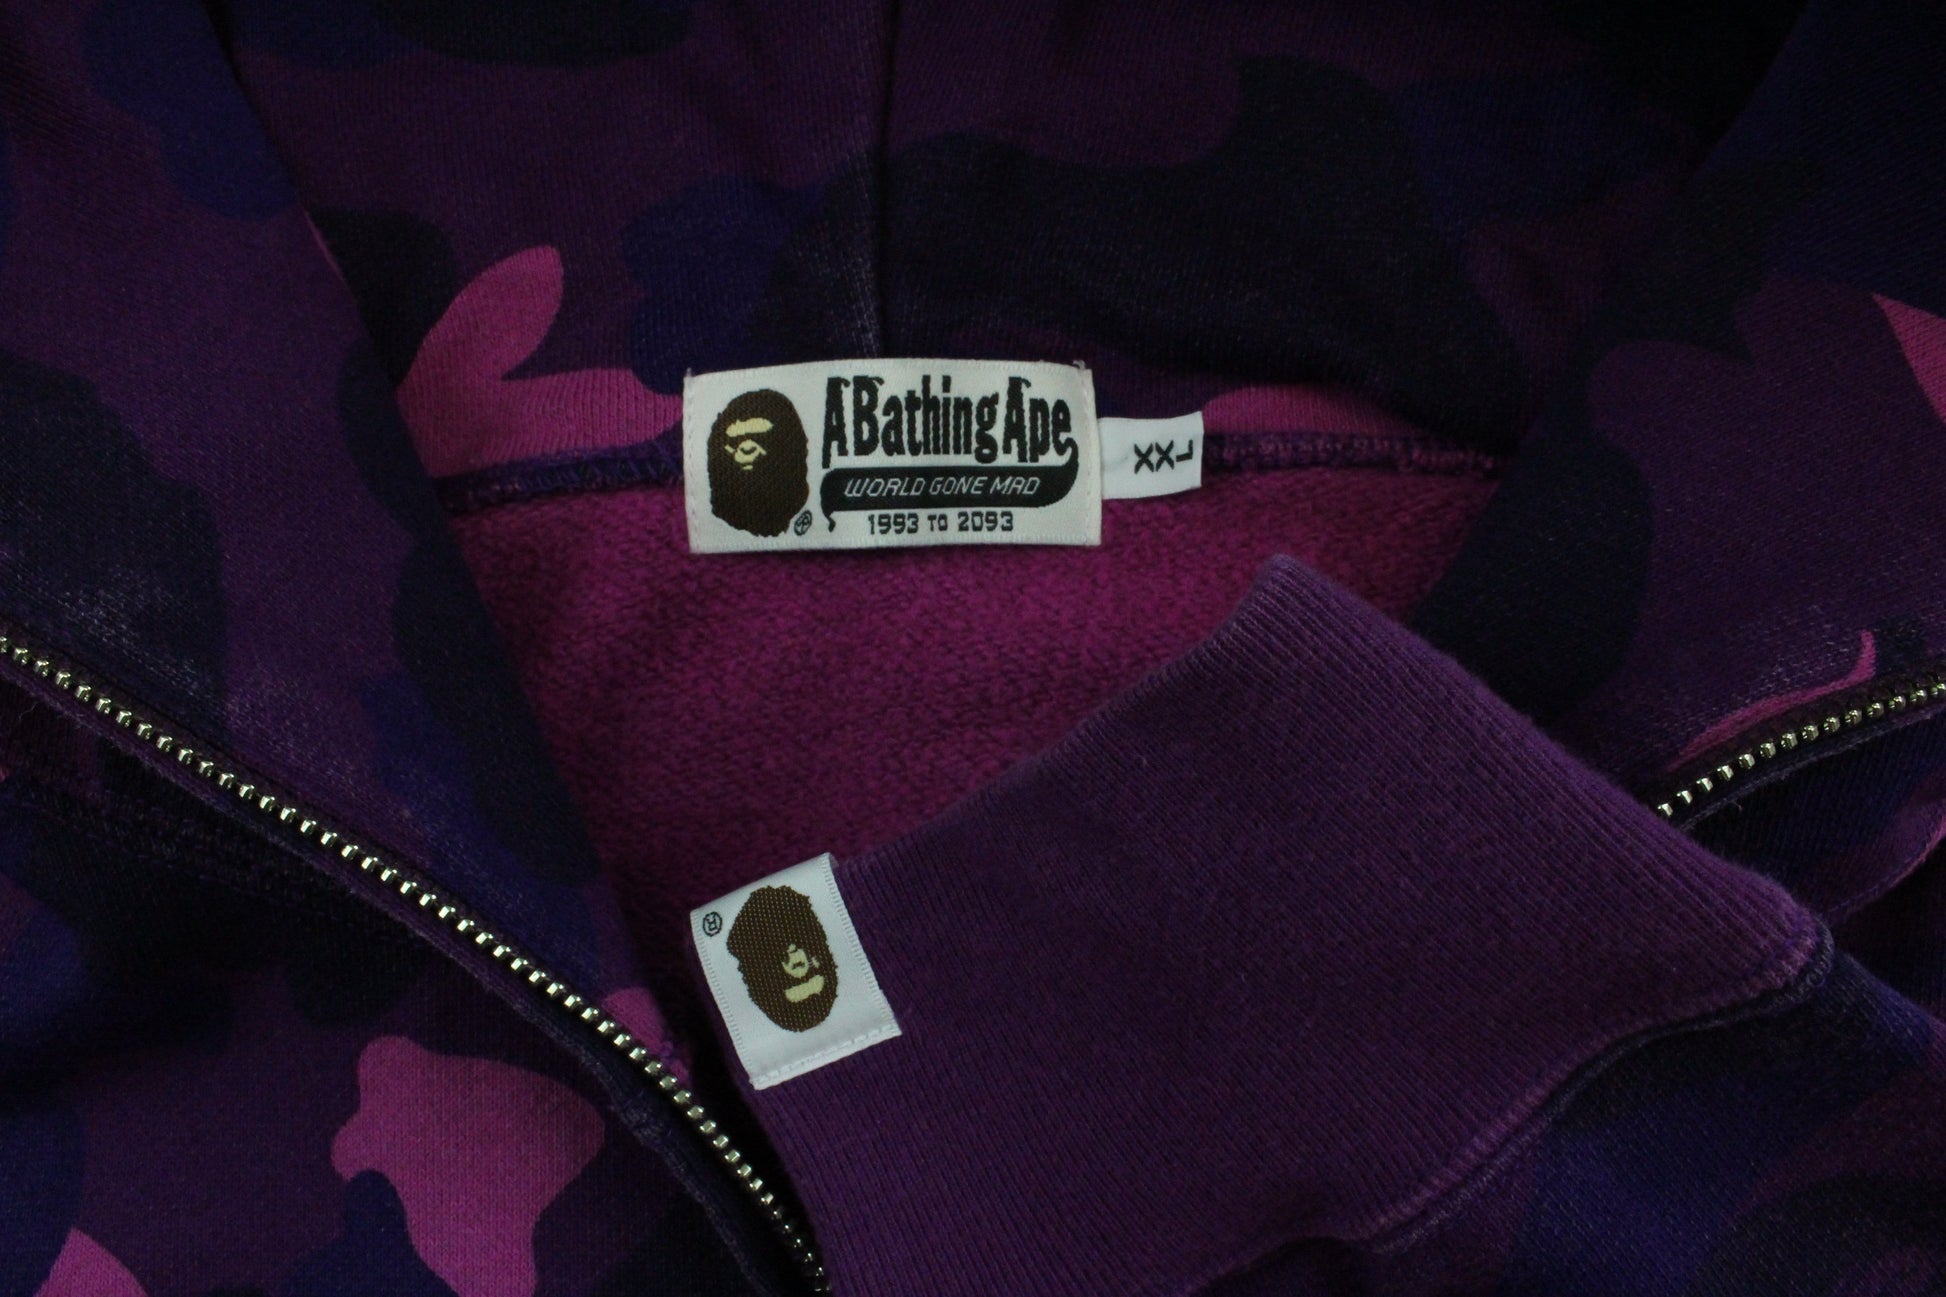 Bape Purple Camo pullover Shark - SaruGeneral